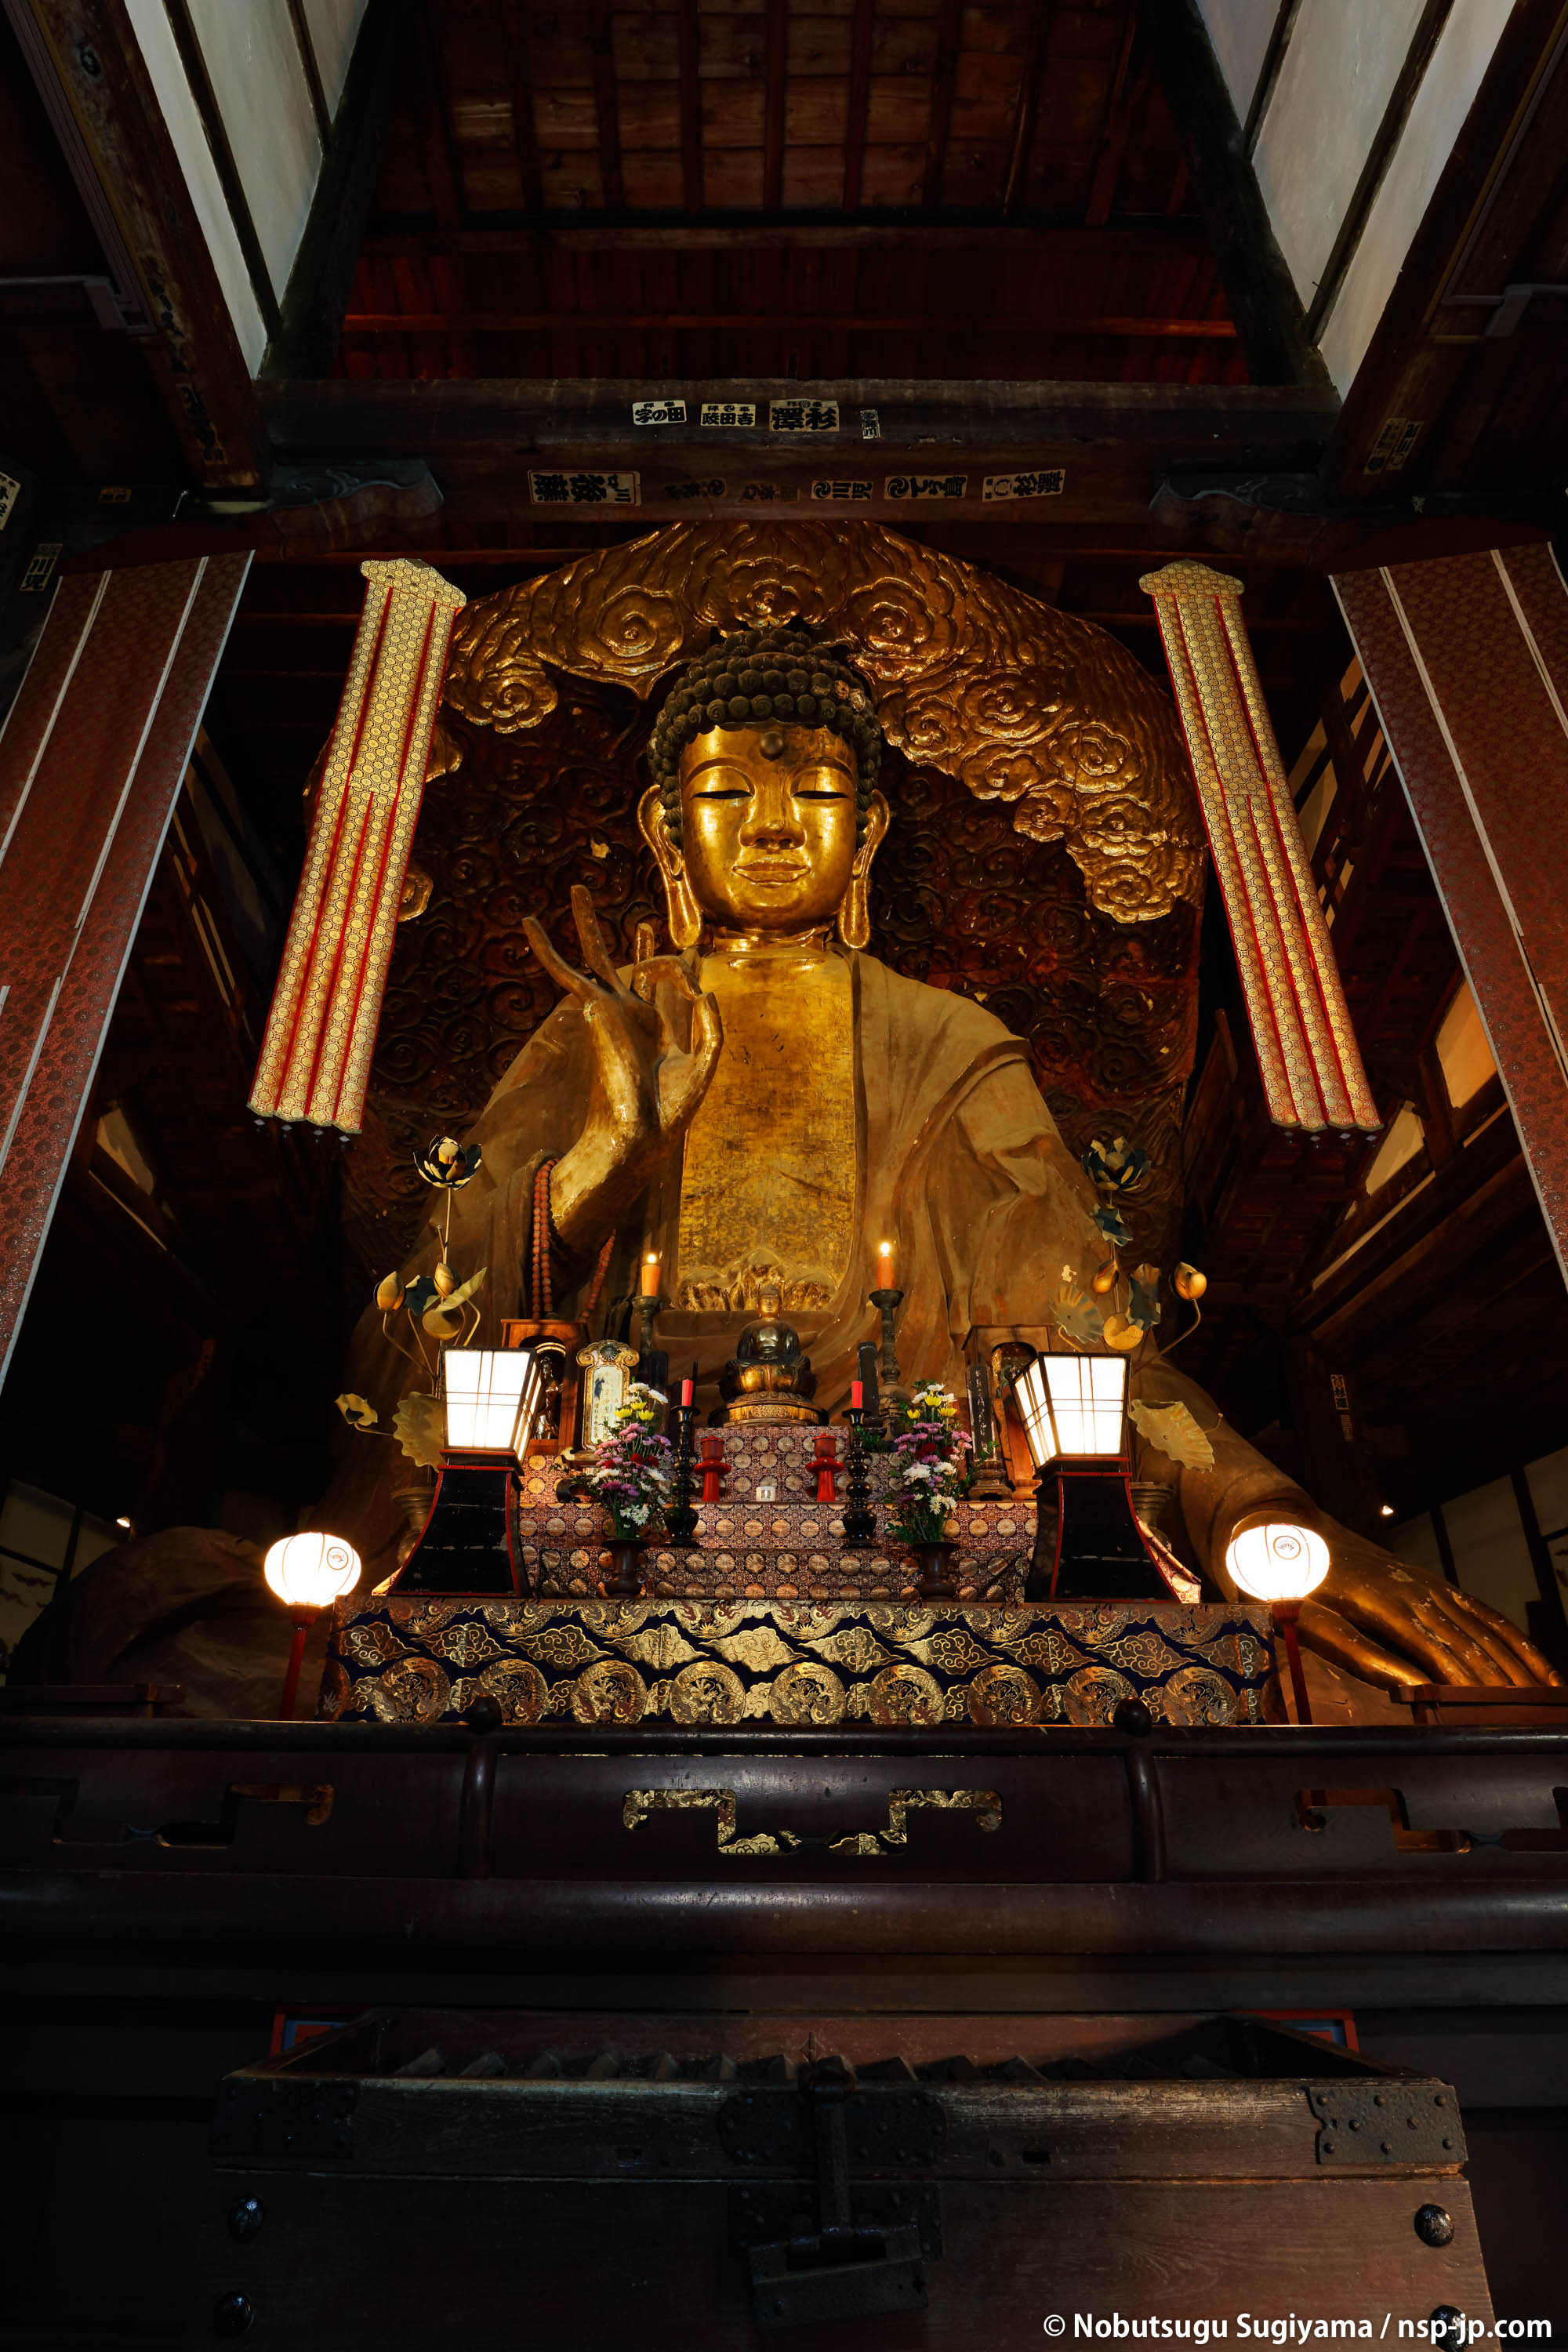 Gifu Grand Bouddha(Temple Dhamma)-Grande image Shakanyorai | Gifu ville natale pèlerinage par Sugiyama Sen 嗣 | 2017Oda Nobunaga publique Gifu Gifu dans la ville nommé d'après 450 ans